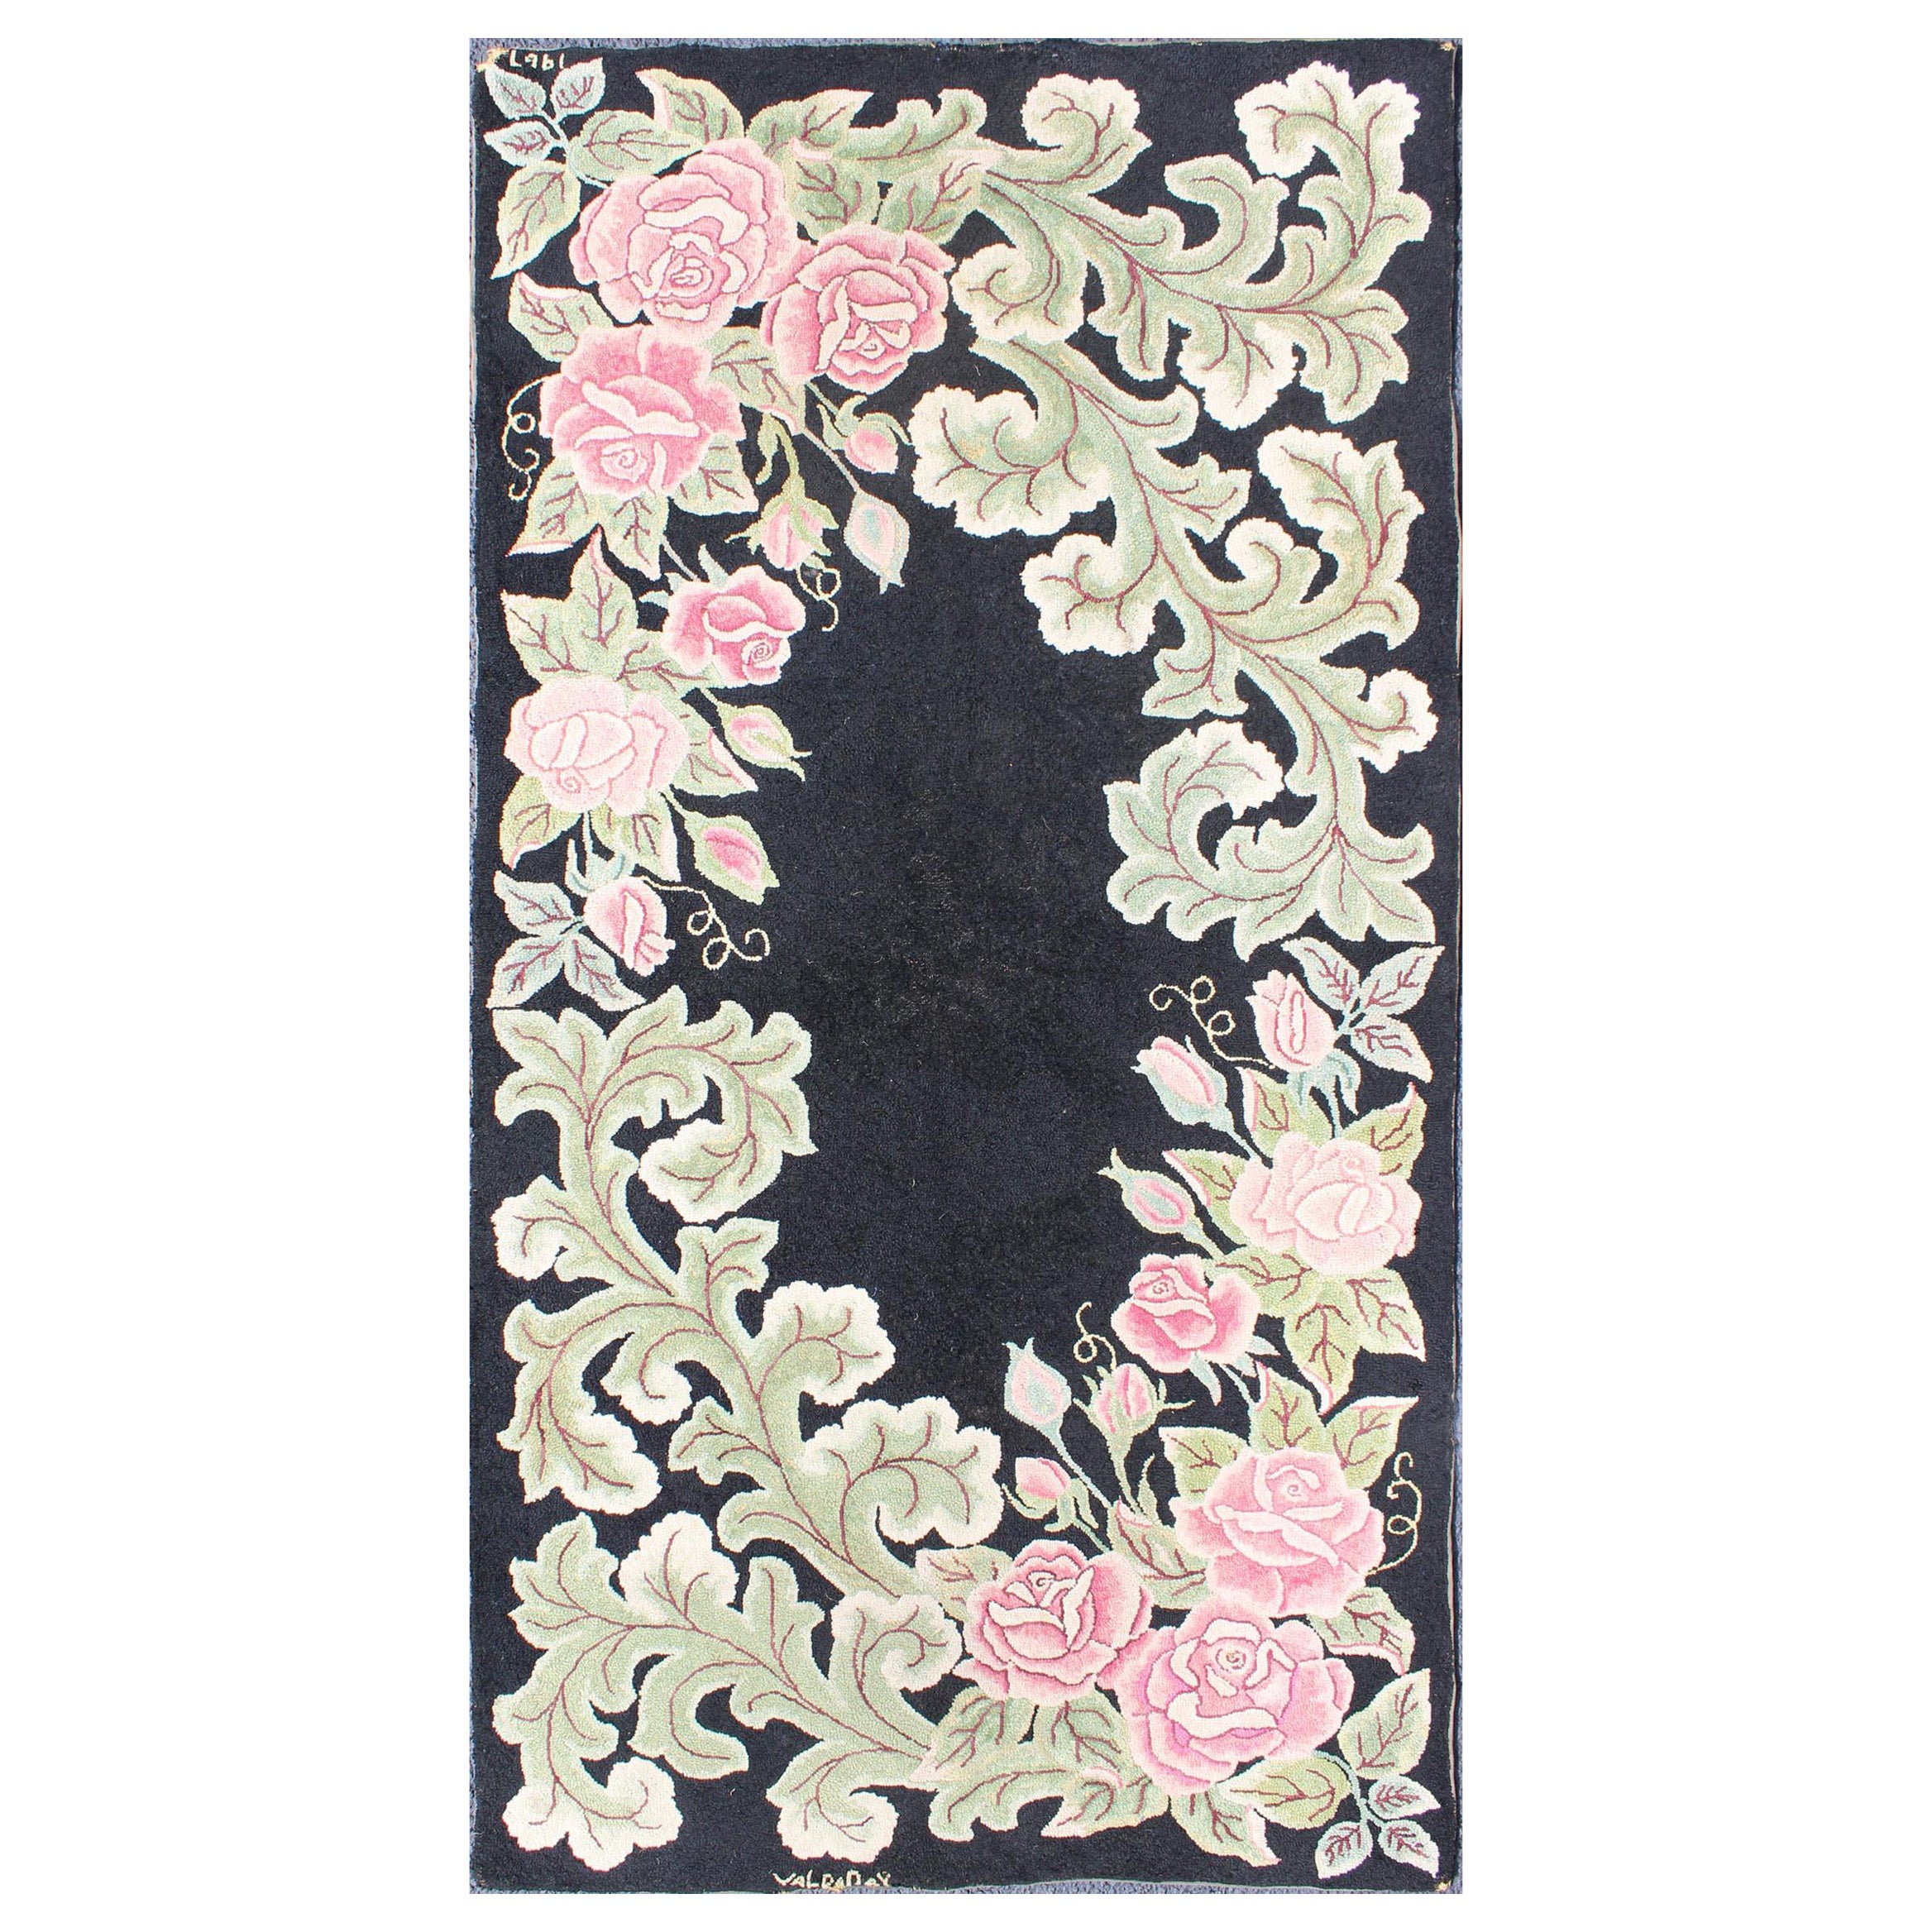 Vintage American Hooked Rug with Large Floral Design on a Black Background